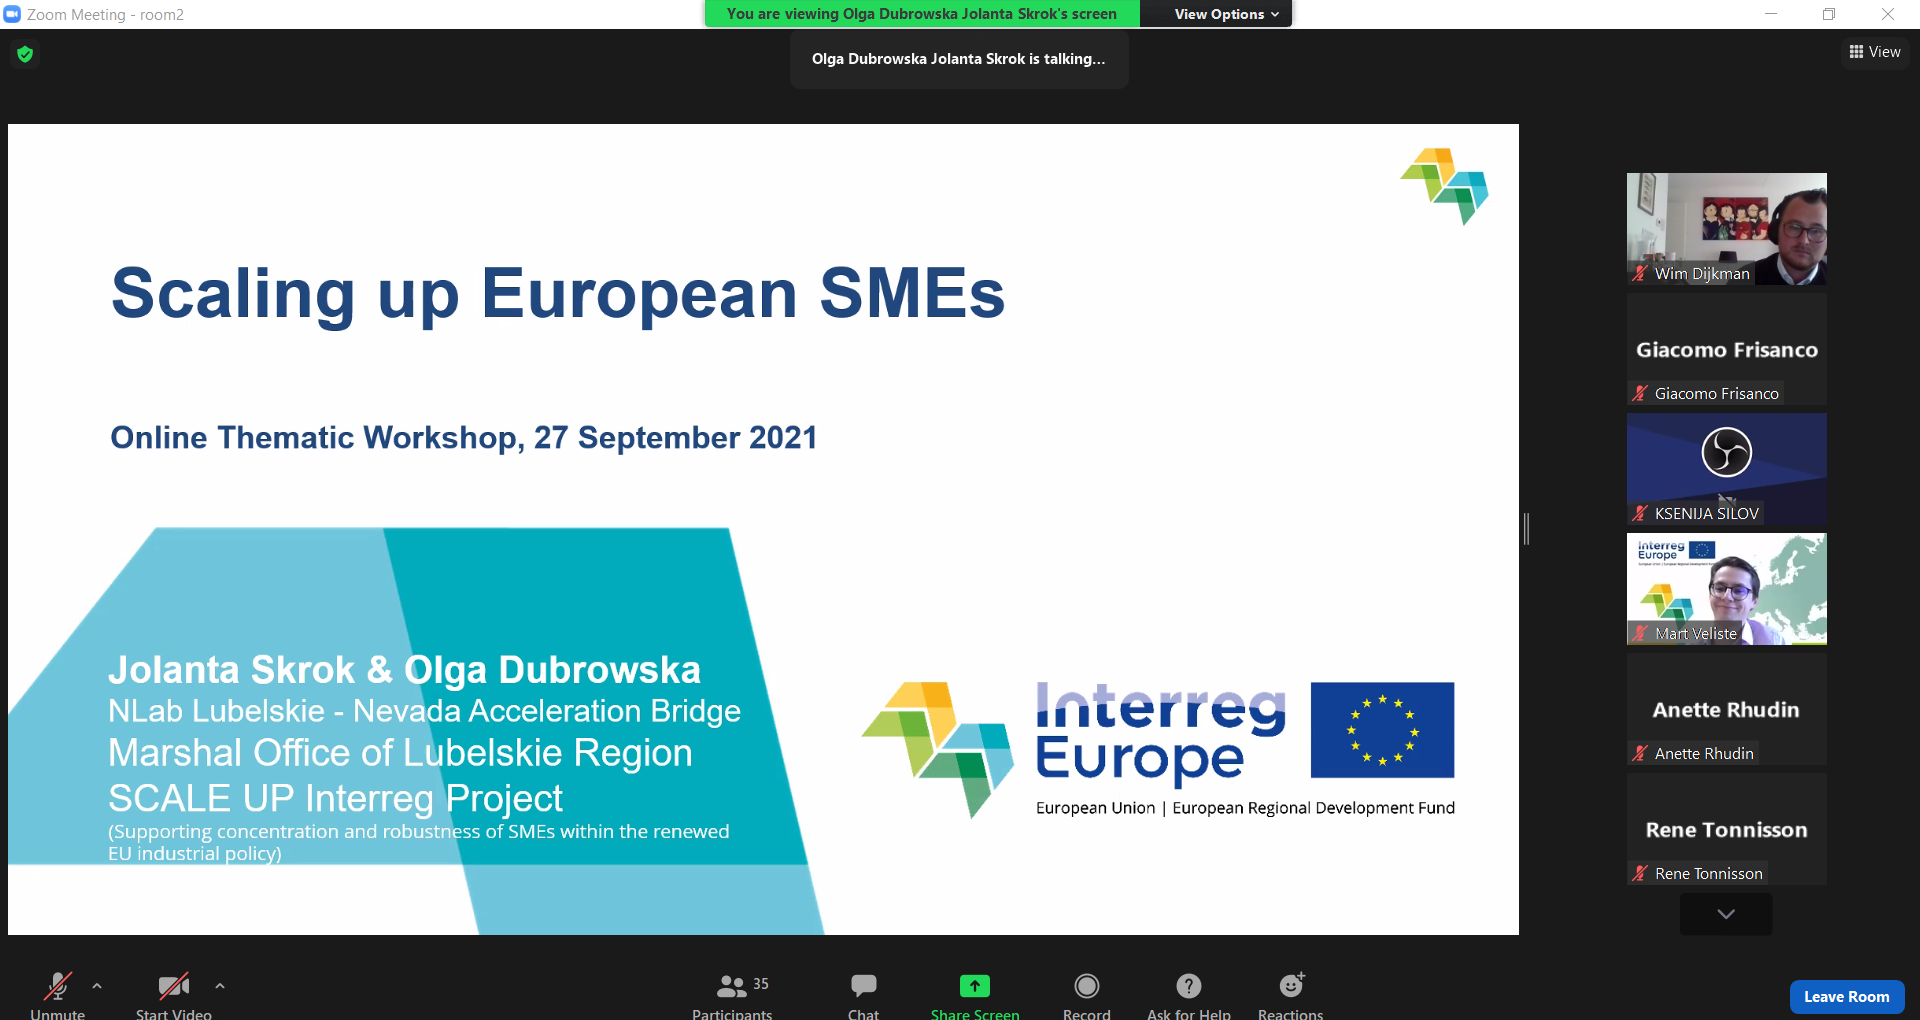 Workshop on scaling up European SMEs